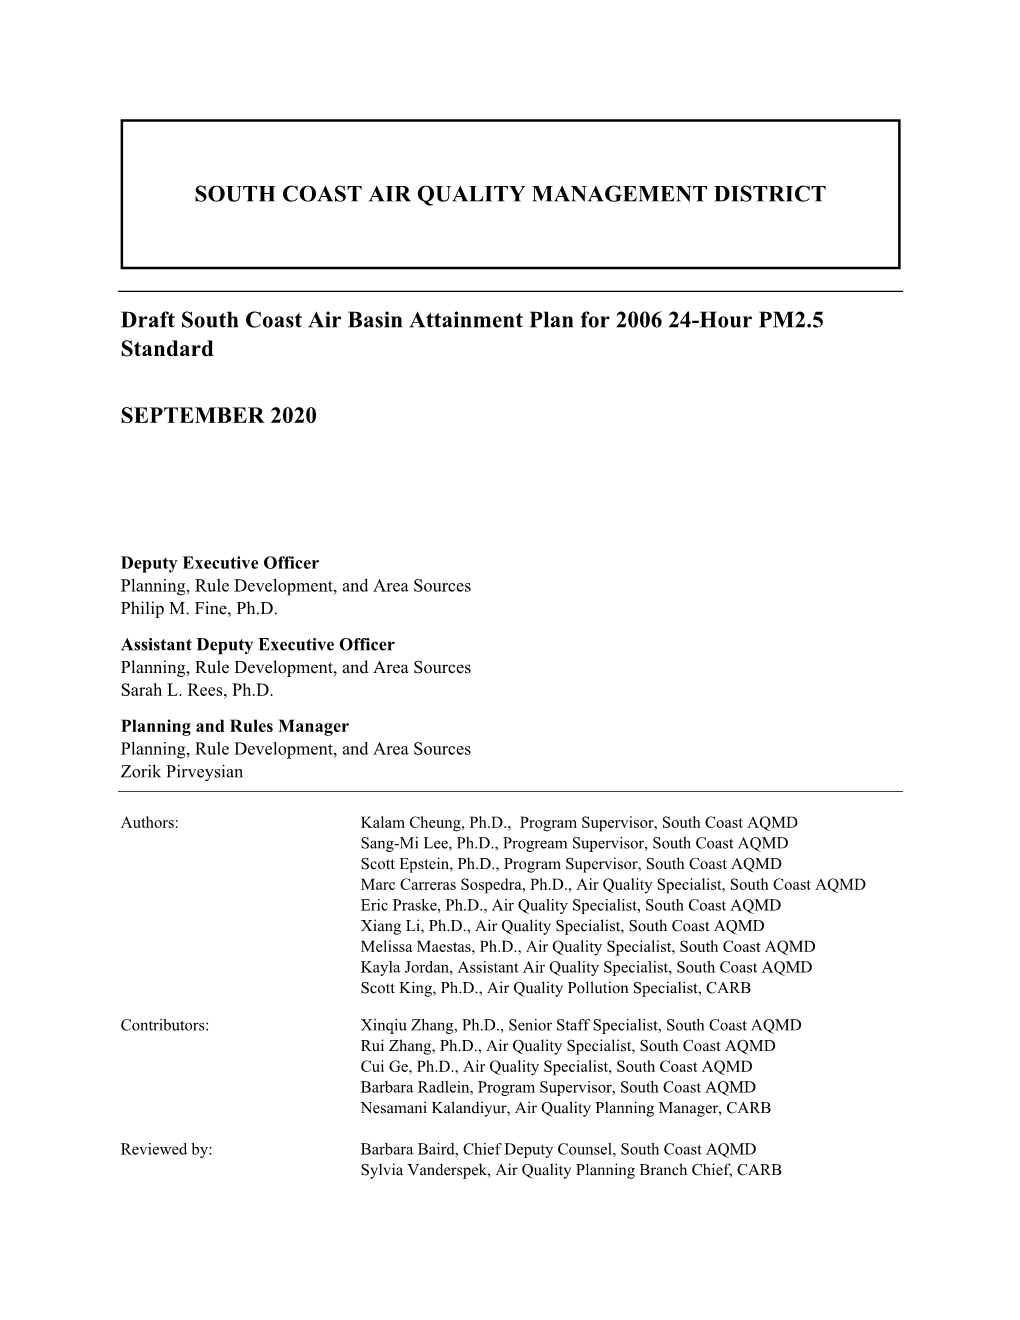 Draft South Coast Air Basin Attainment Plan for 2006 24-Hour PM2.5 Standard